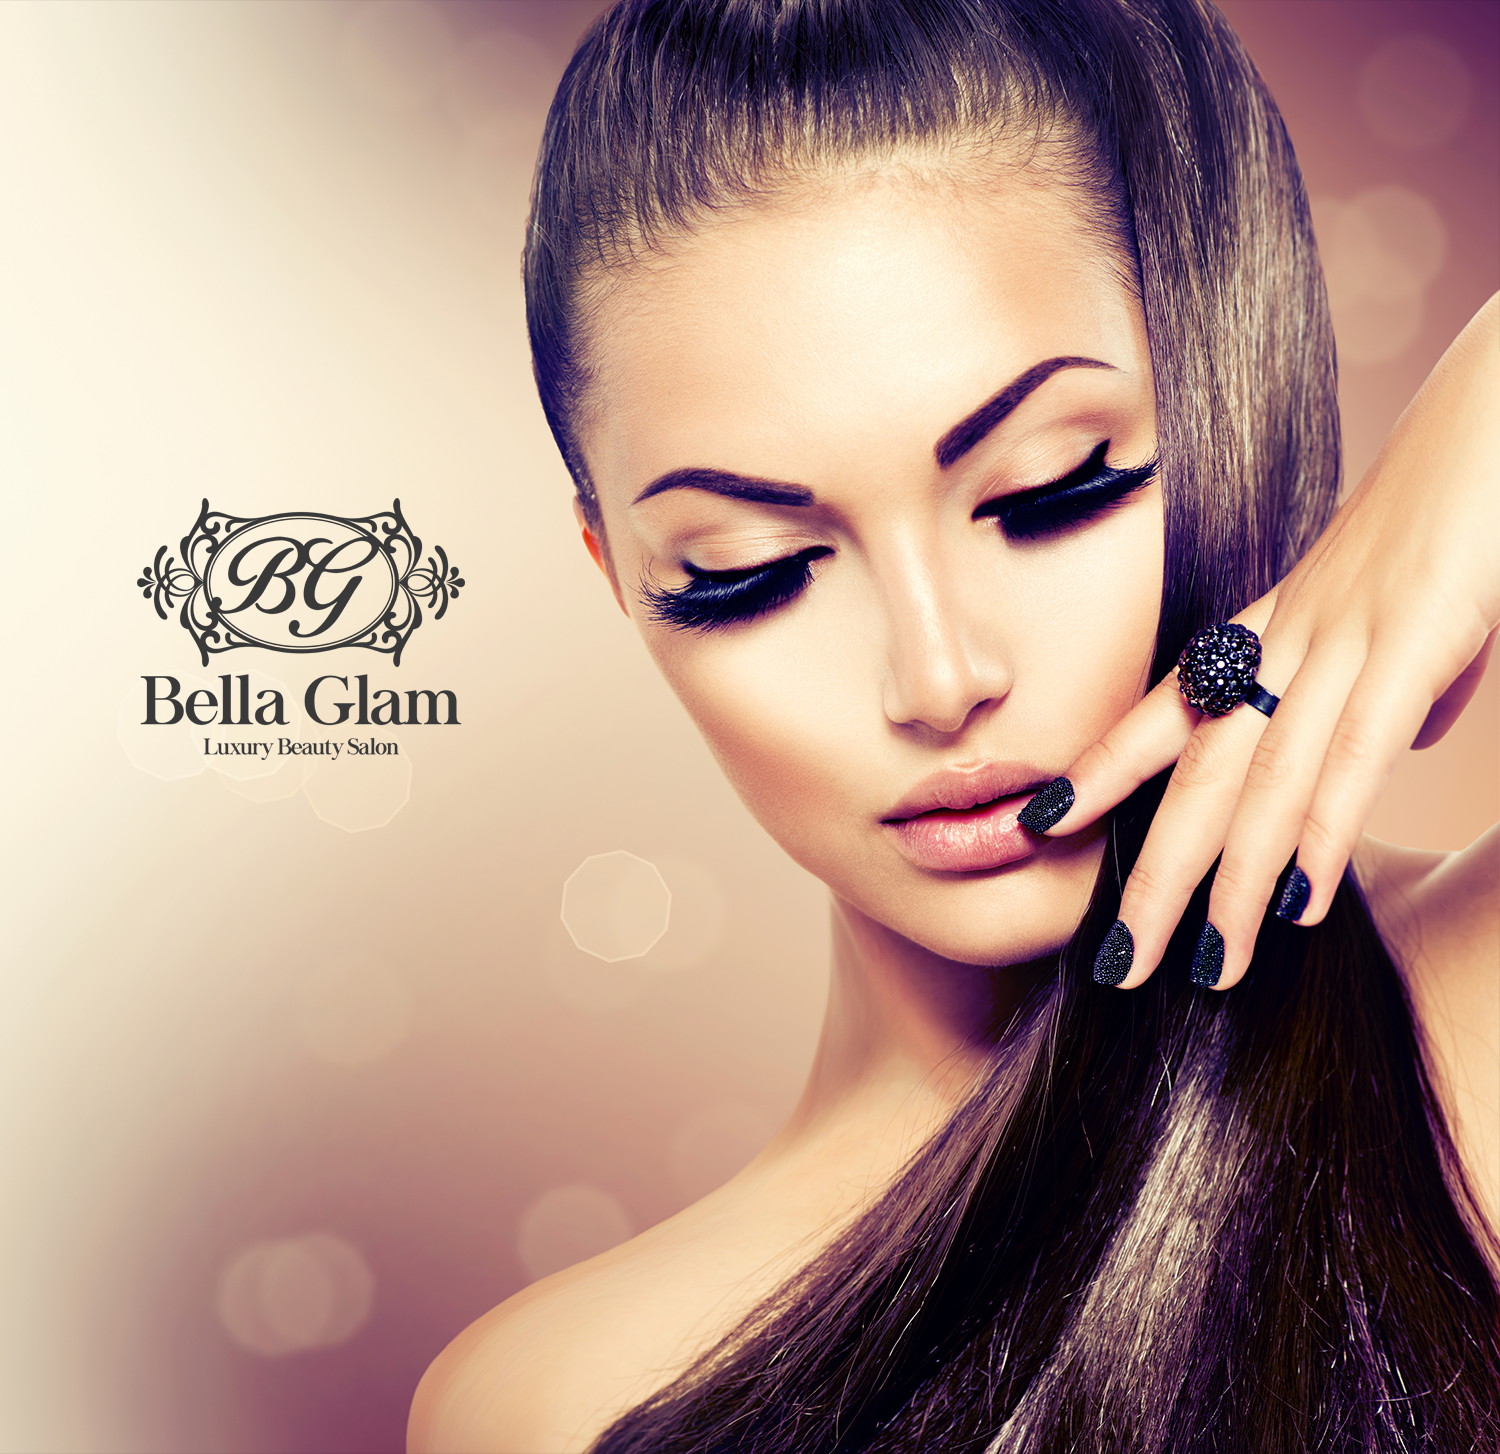 Bella Glam Beauty Salon In Lakeland FL | Vagaro